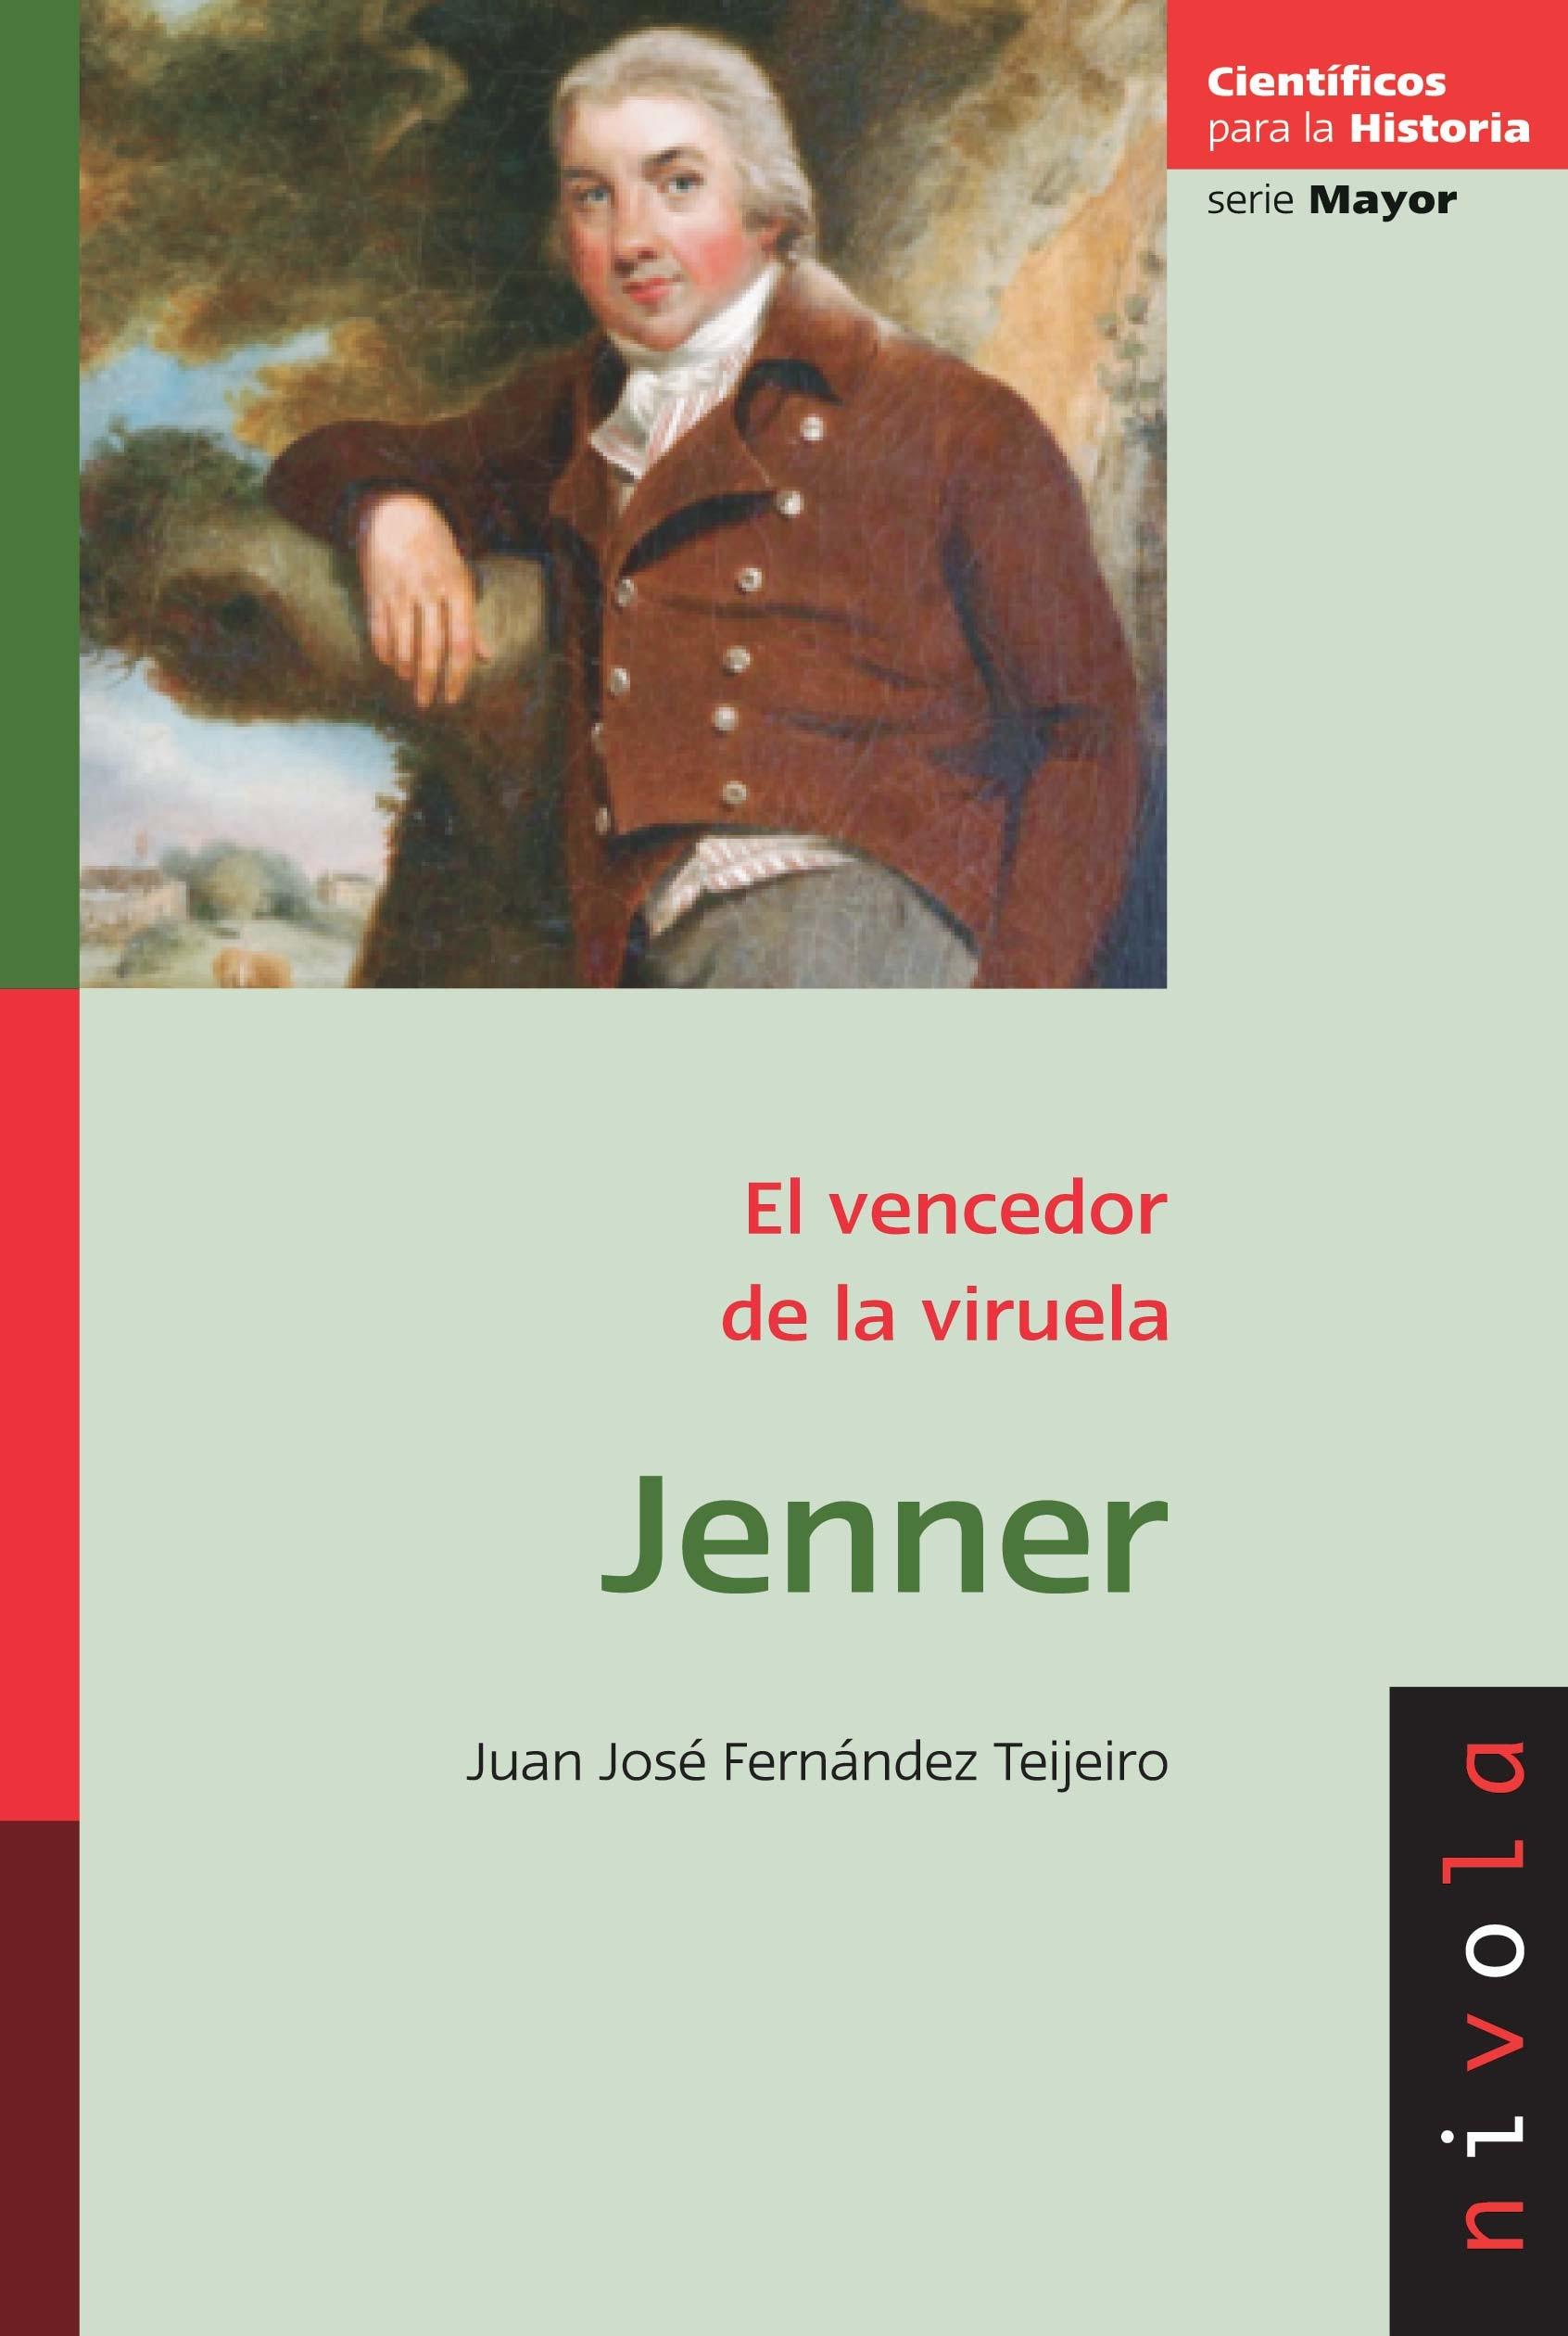 Jenner "El vencedor de la viruela"